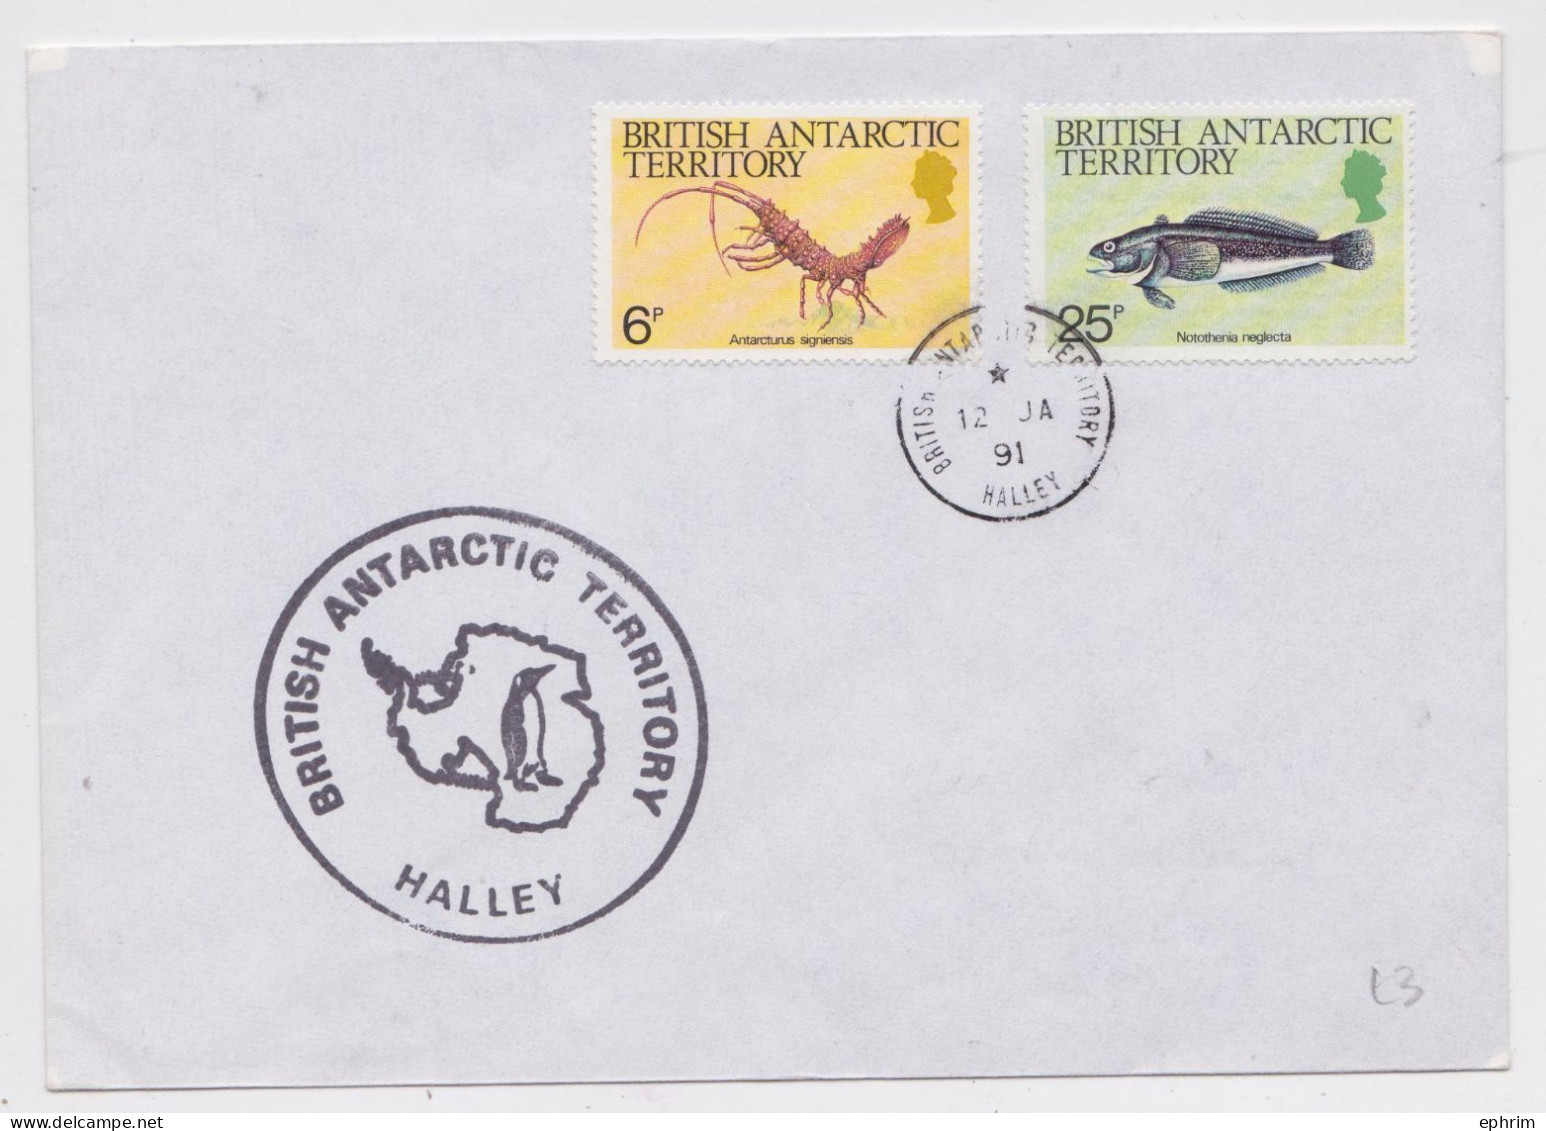 Antarctique BAT Britsh Antarctic Territory Base Halley Marine Life Stamp Cover 1991 Enveloppe Timbre Poisson Crustacé - Storia Postale